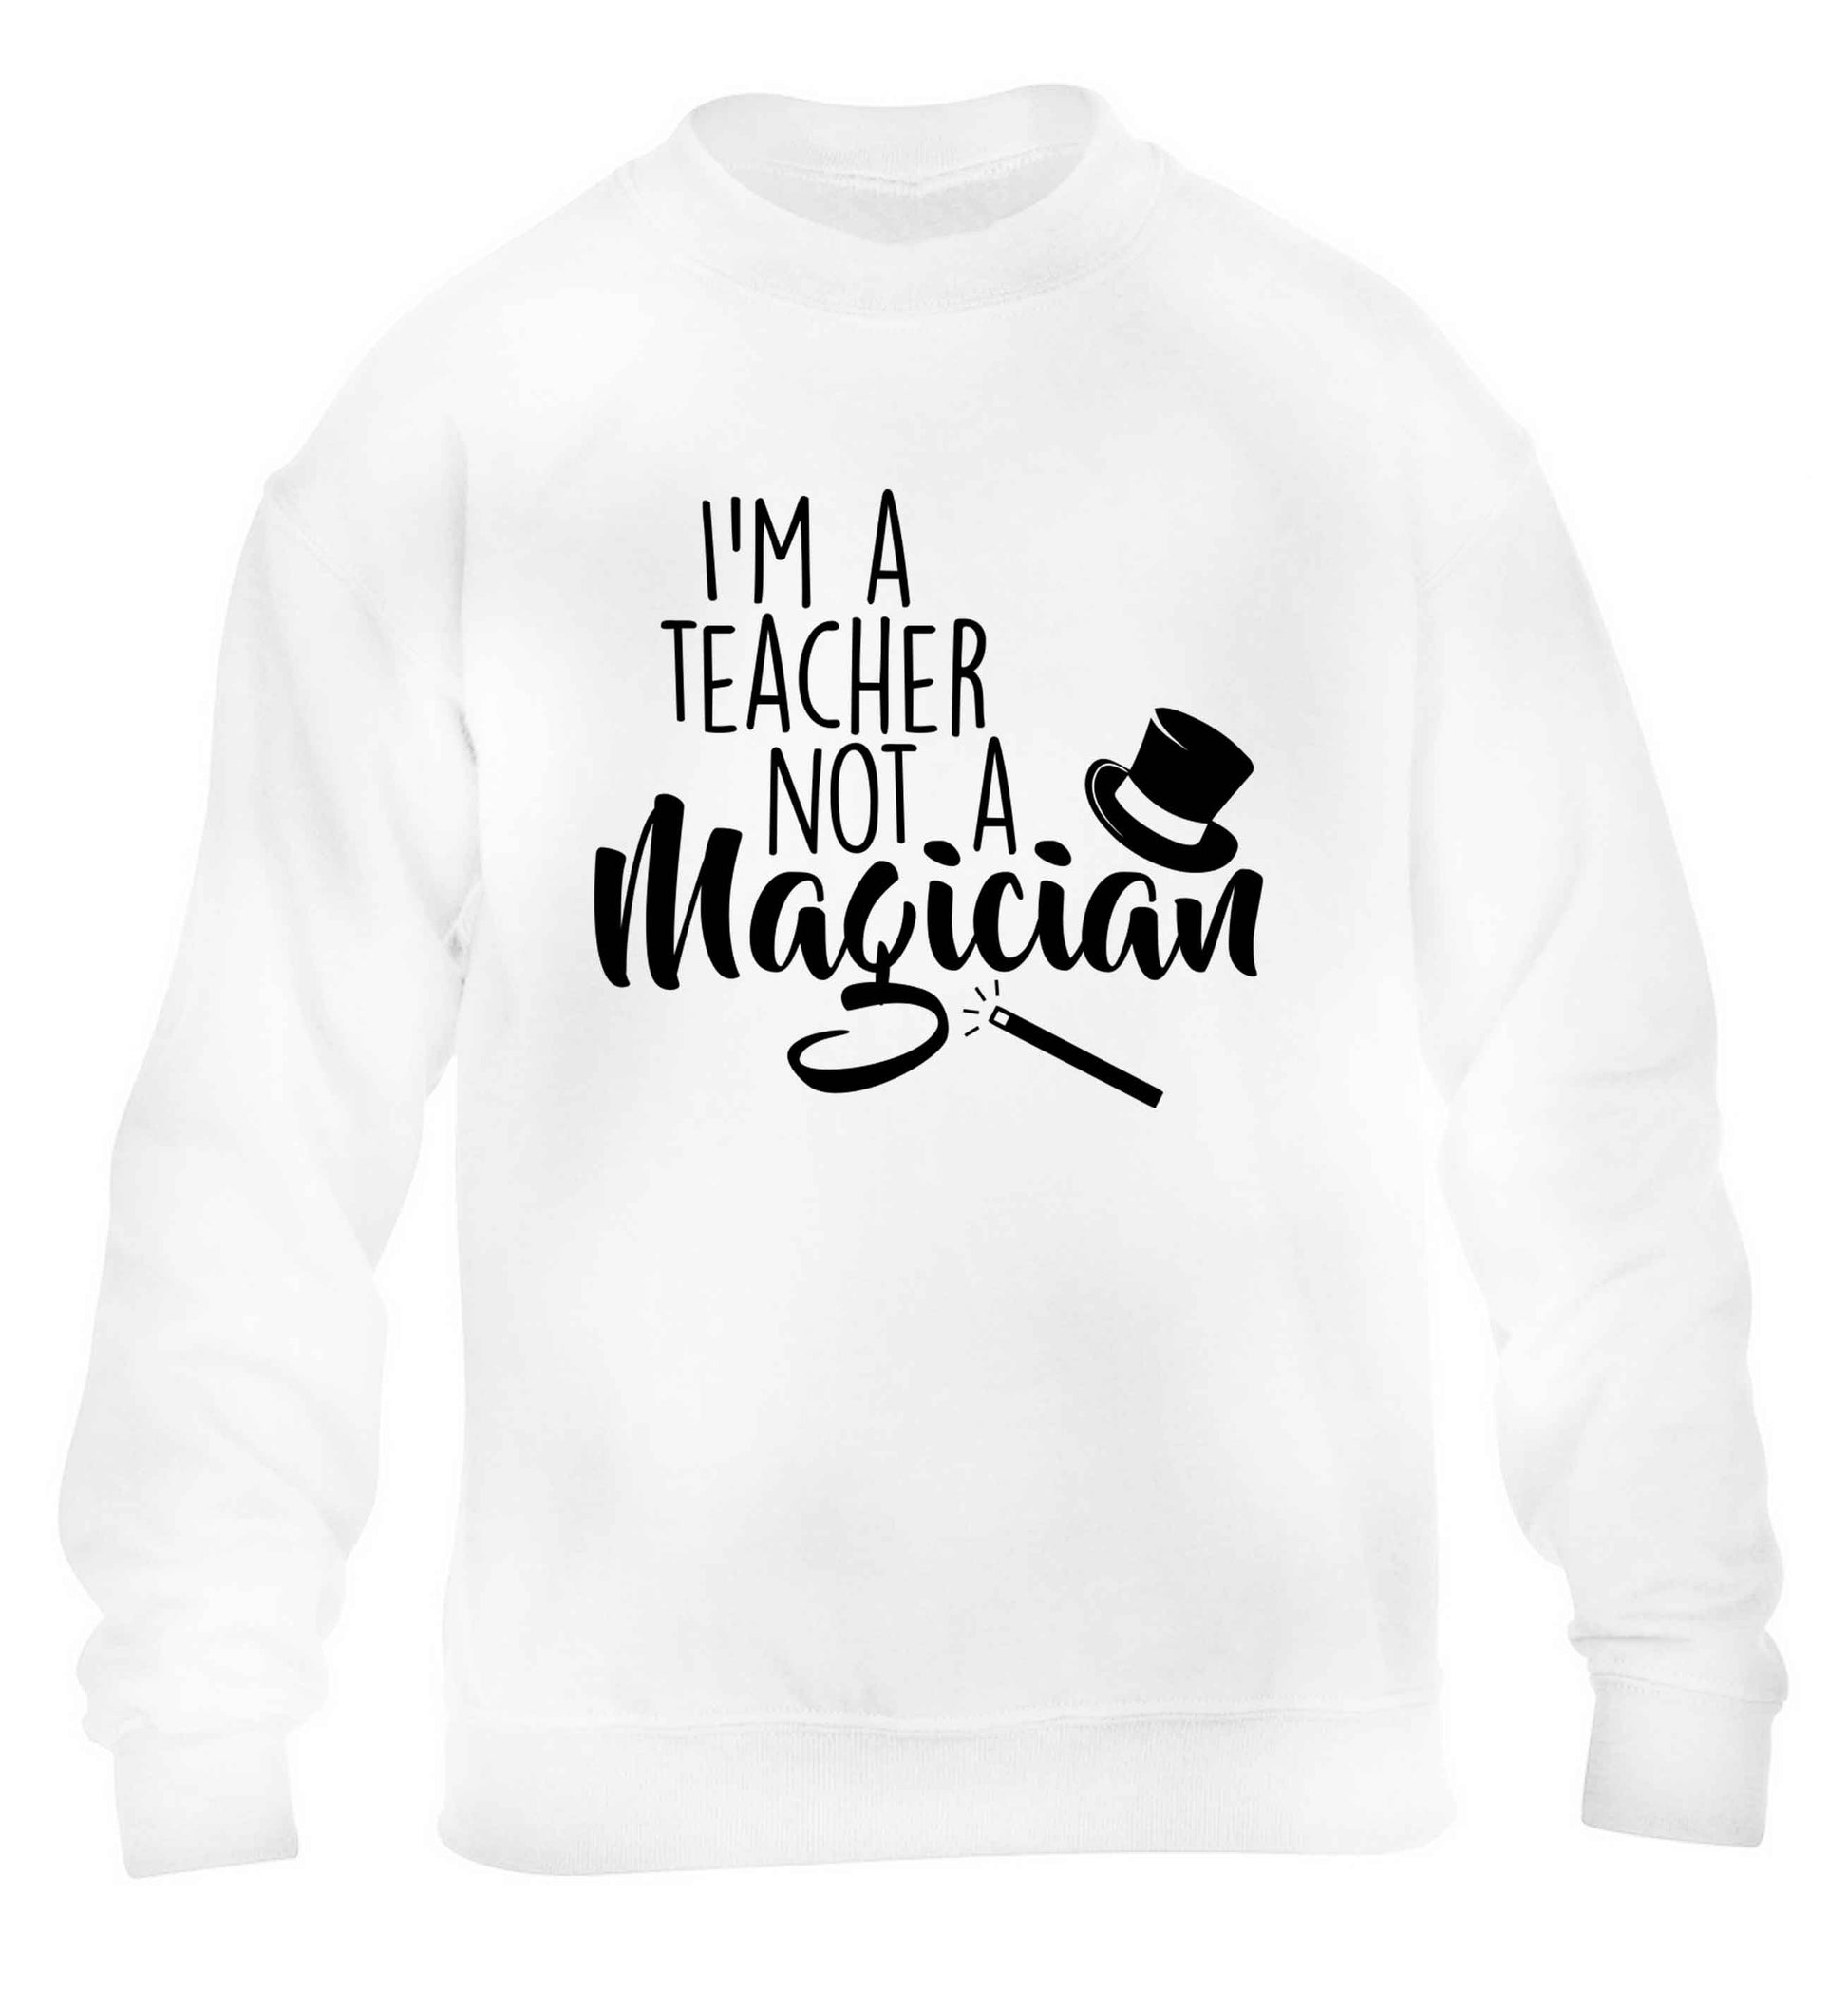 I'm a teacher not a magician children's white sweater 12-13 Years